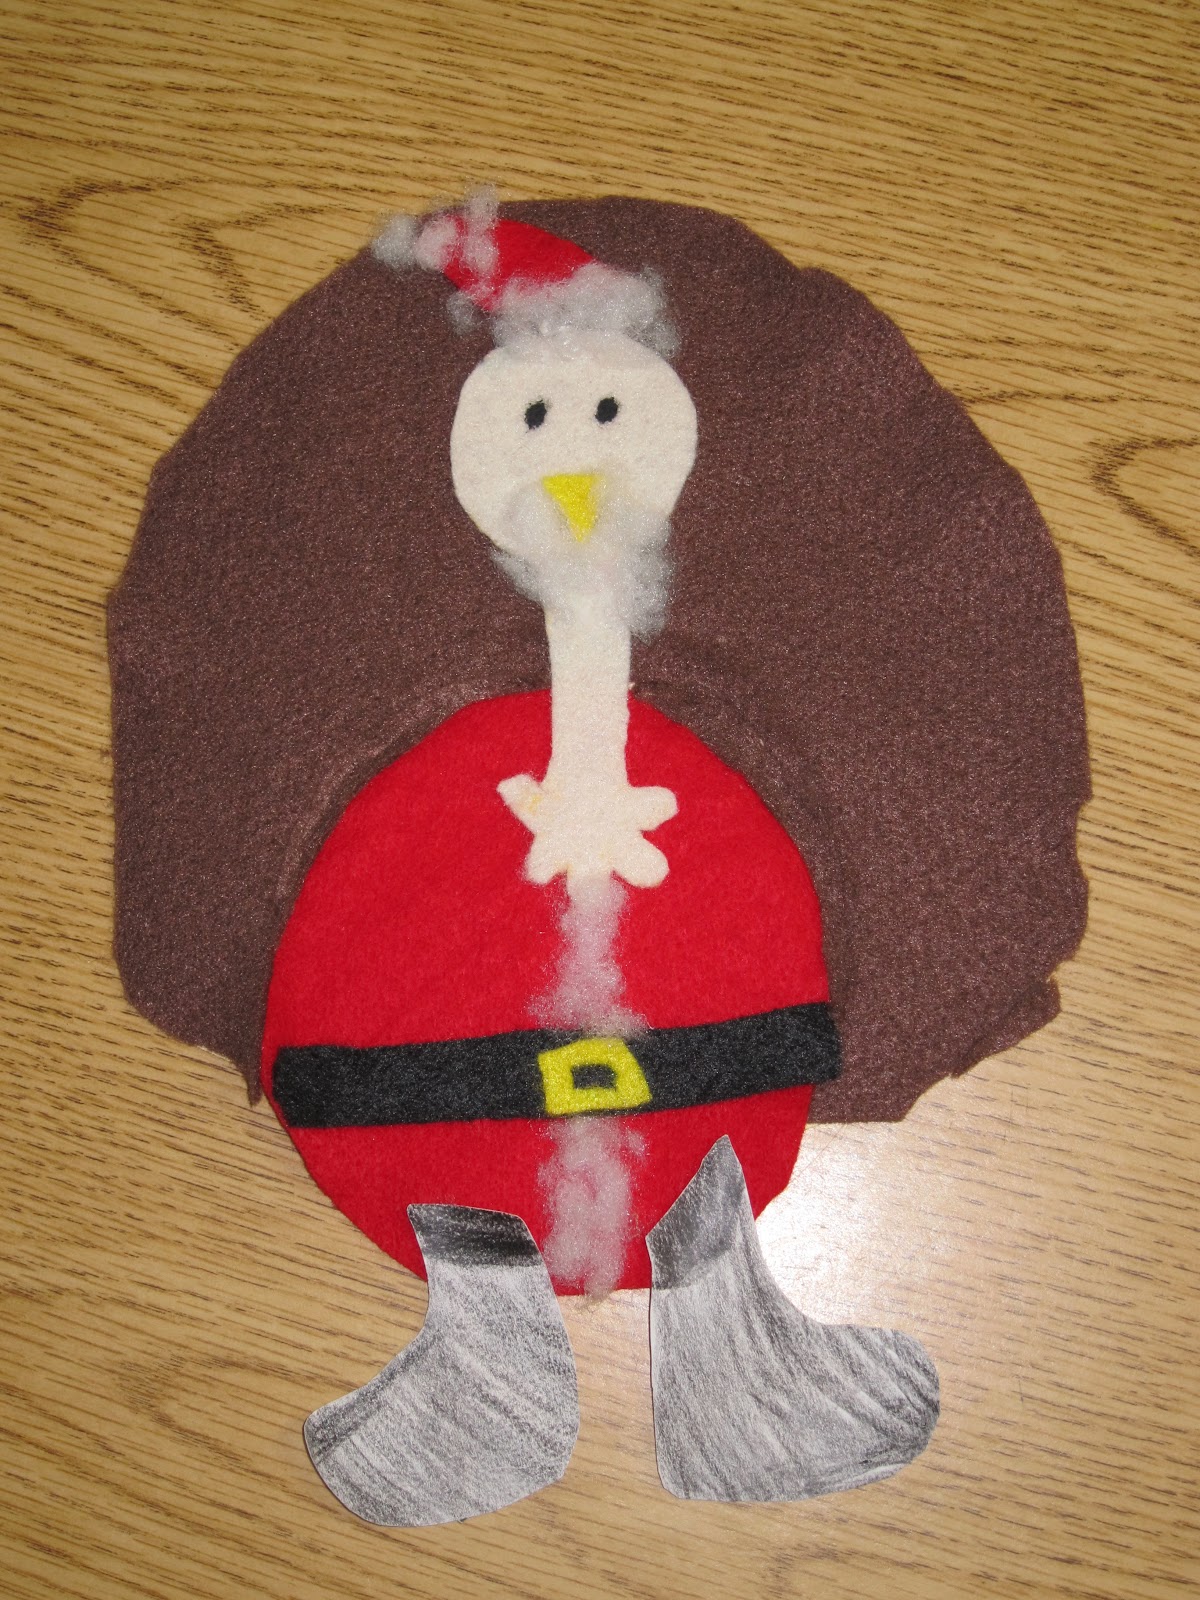 Tenacity 4 Teaching: Thanksgiving Turkeys in Disguise